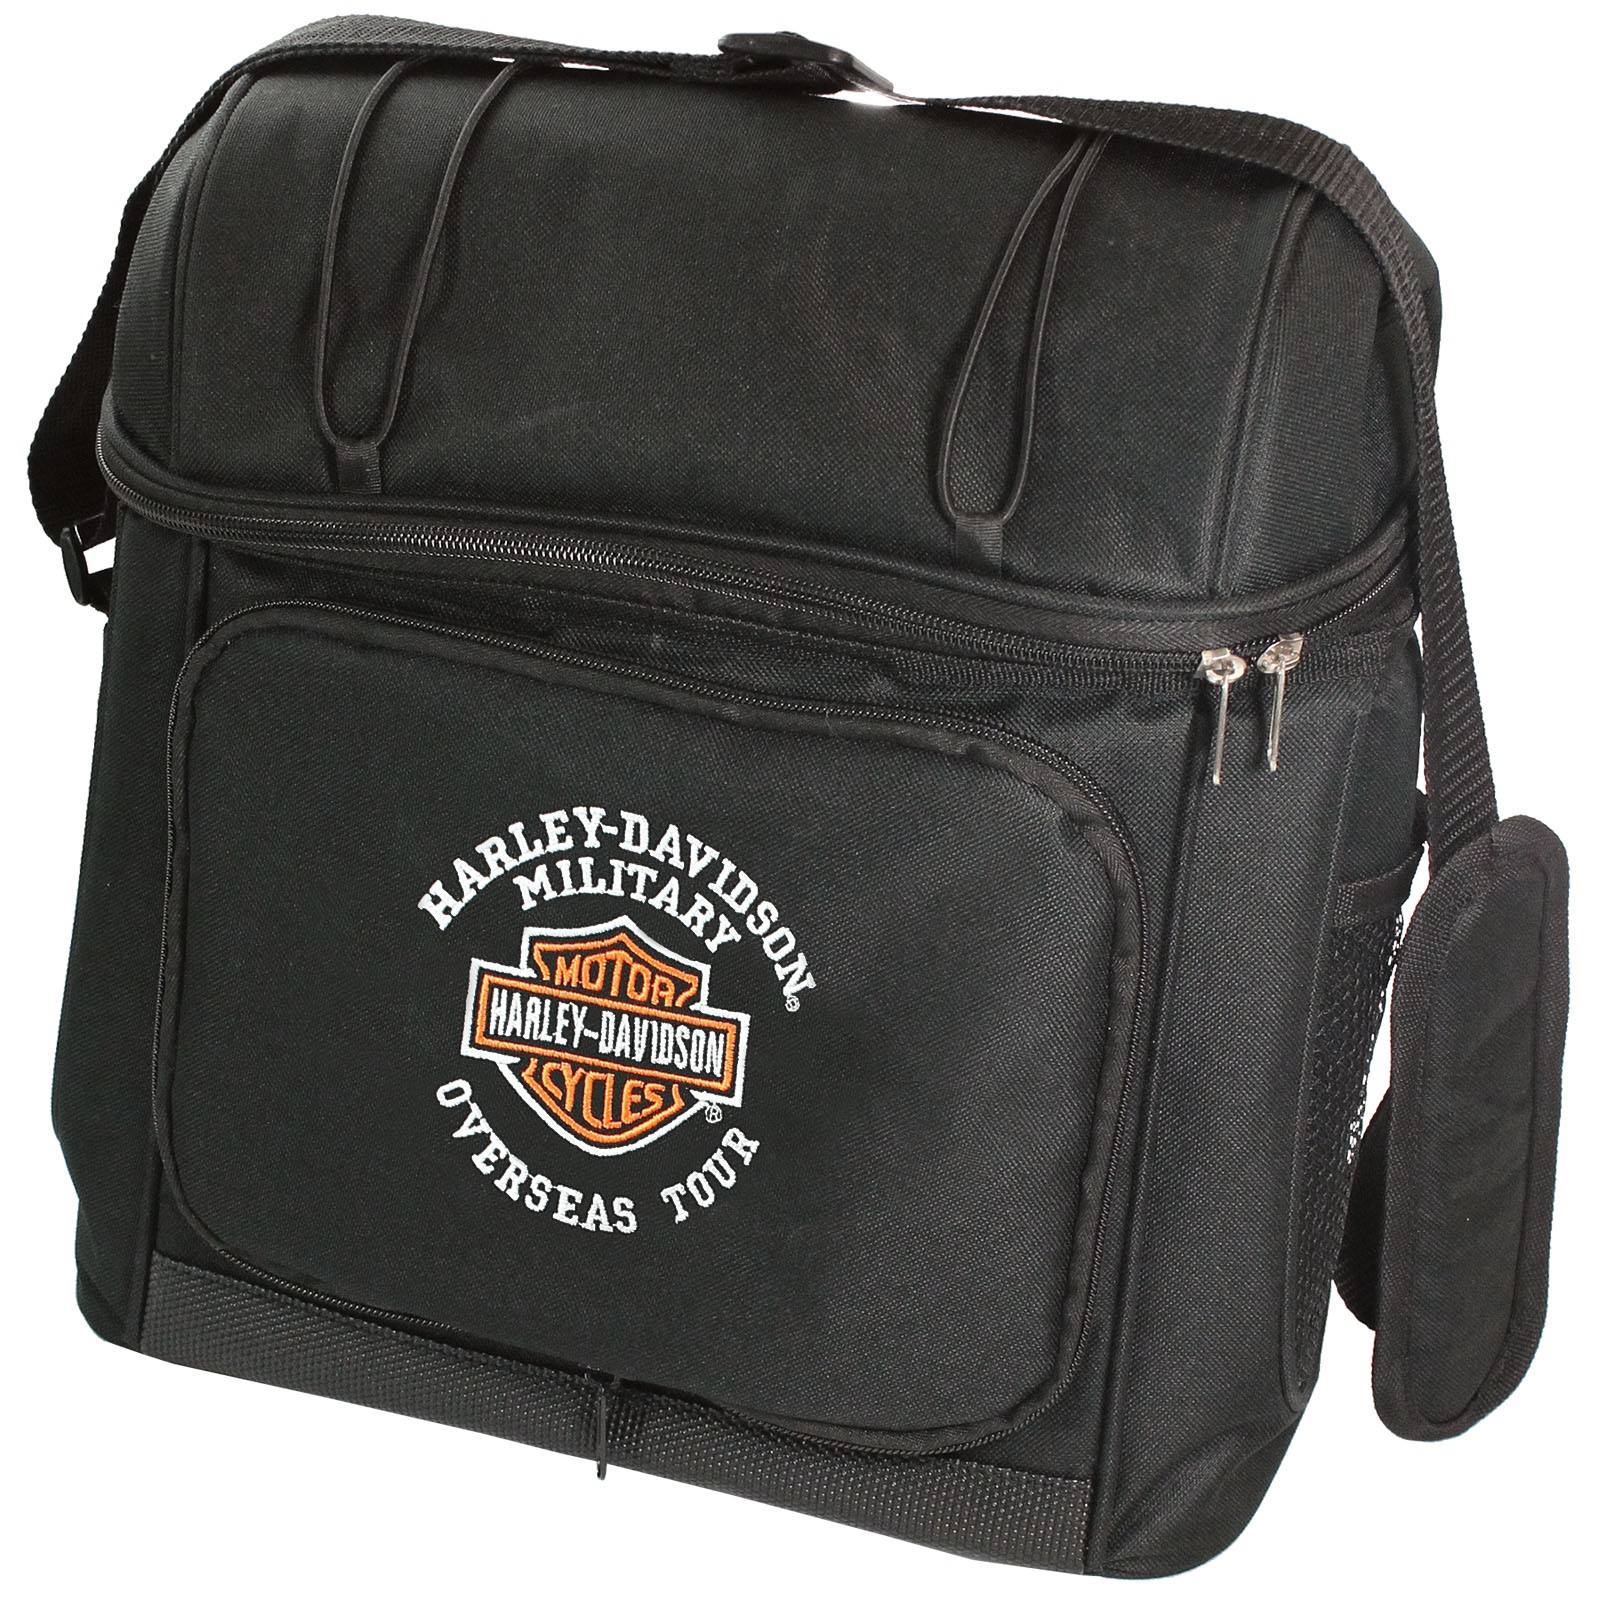  Harley  Davidson  12 Pack Cooler Bag Overseas Tour  